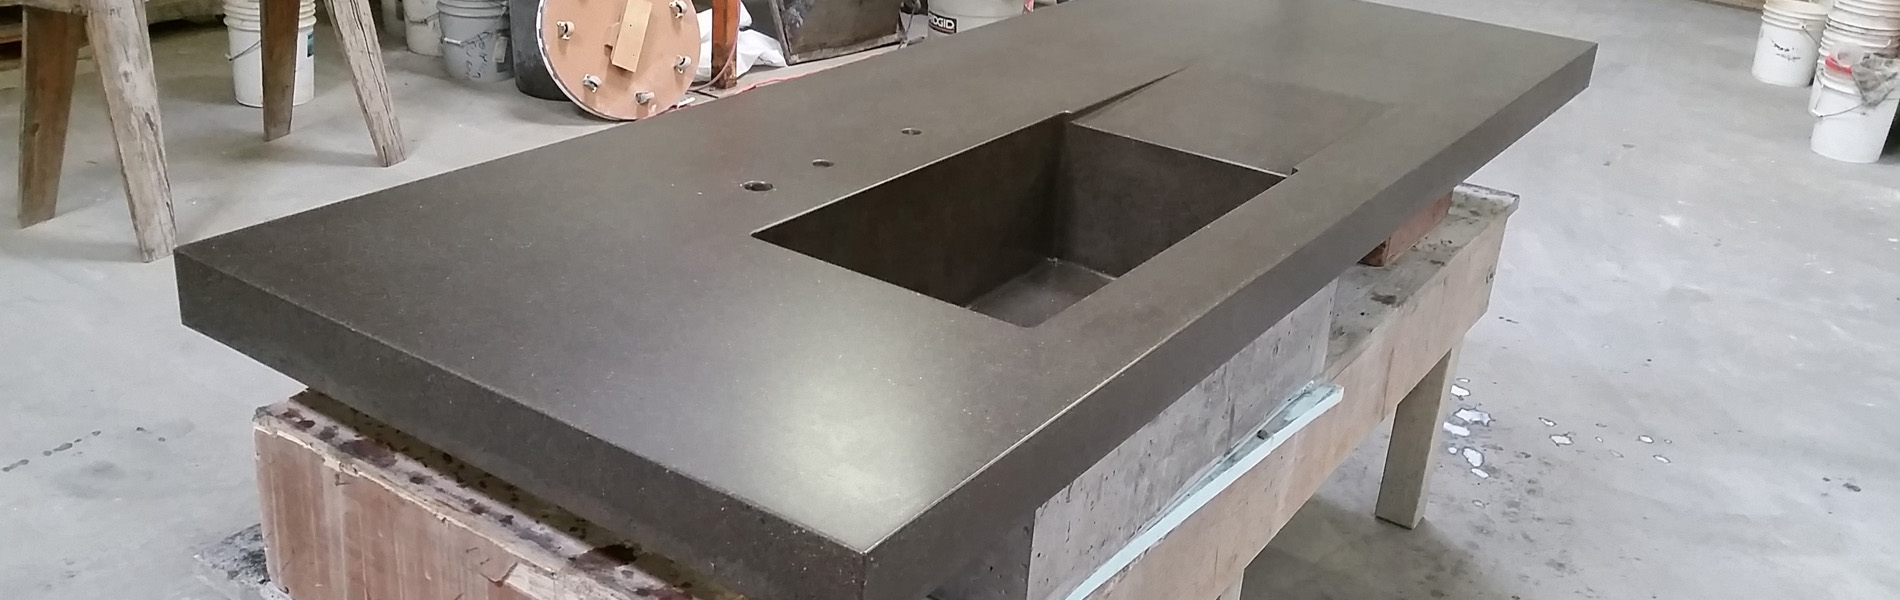 How Durable Are Concrete Countertops Dogpaw Design